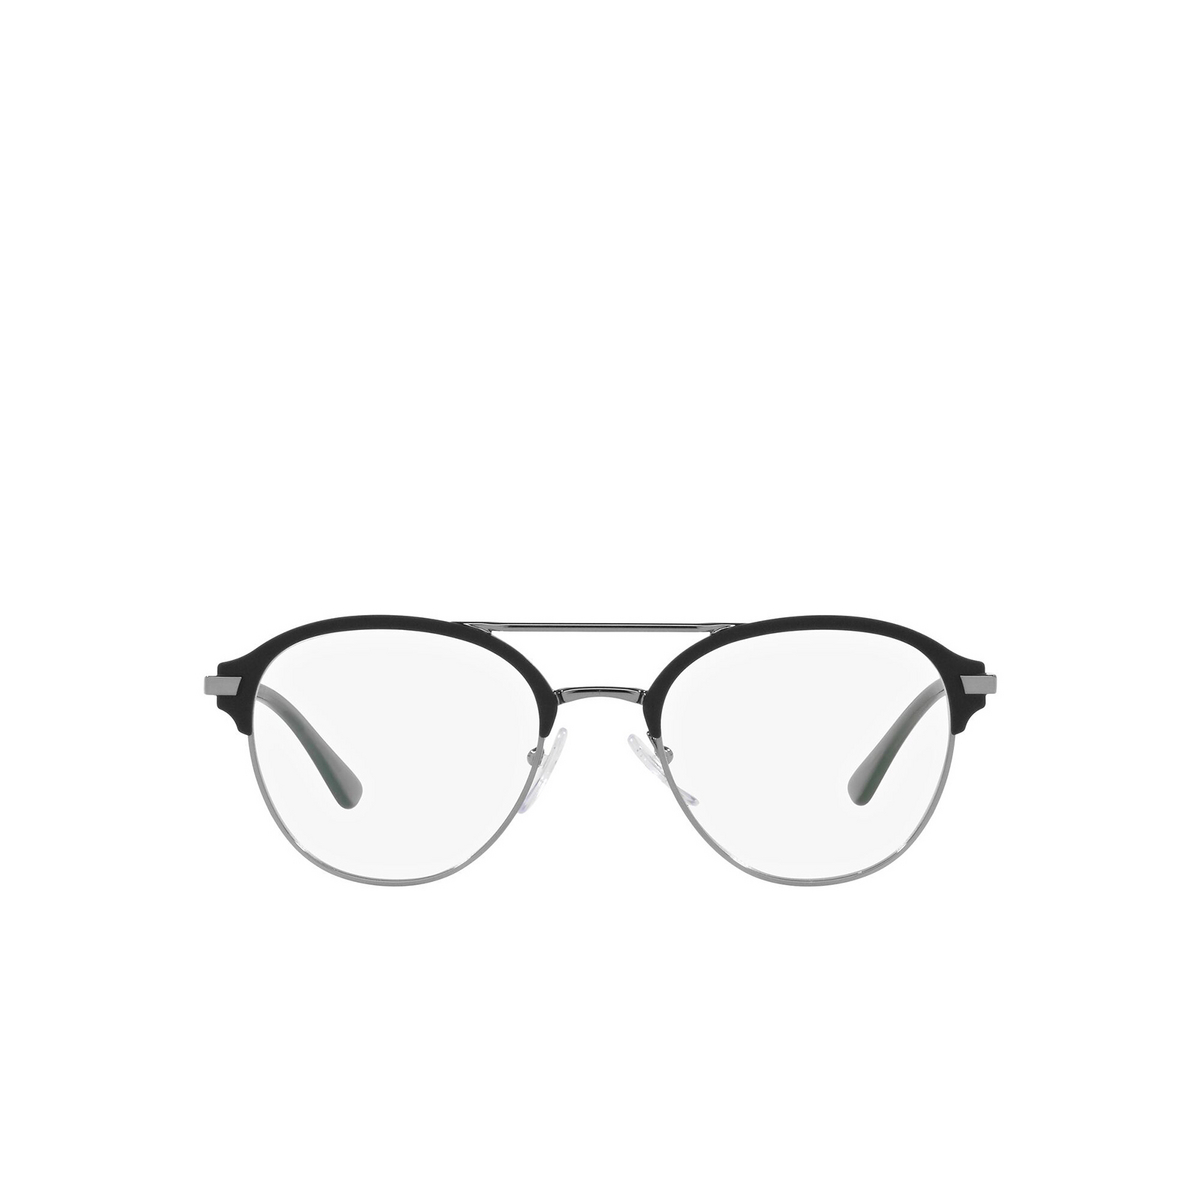 Prada PR 61WV Eyeglasses 02G1O1 Matte Black / Gunmetal - front view